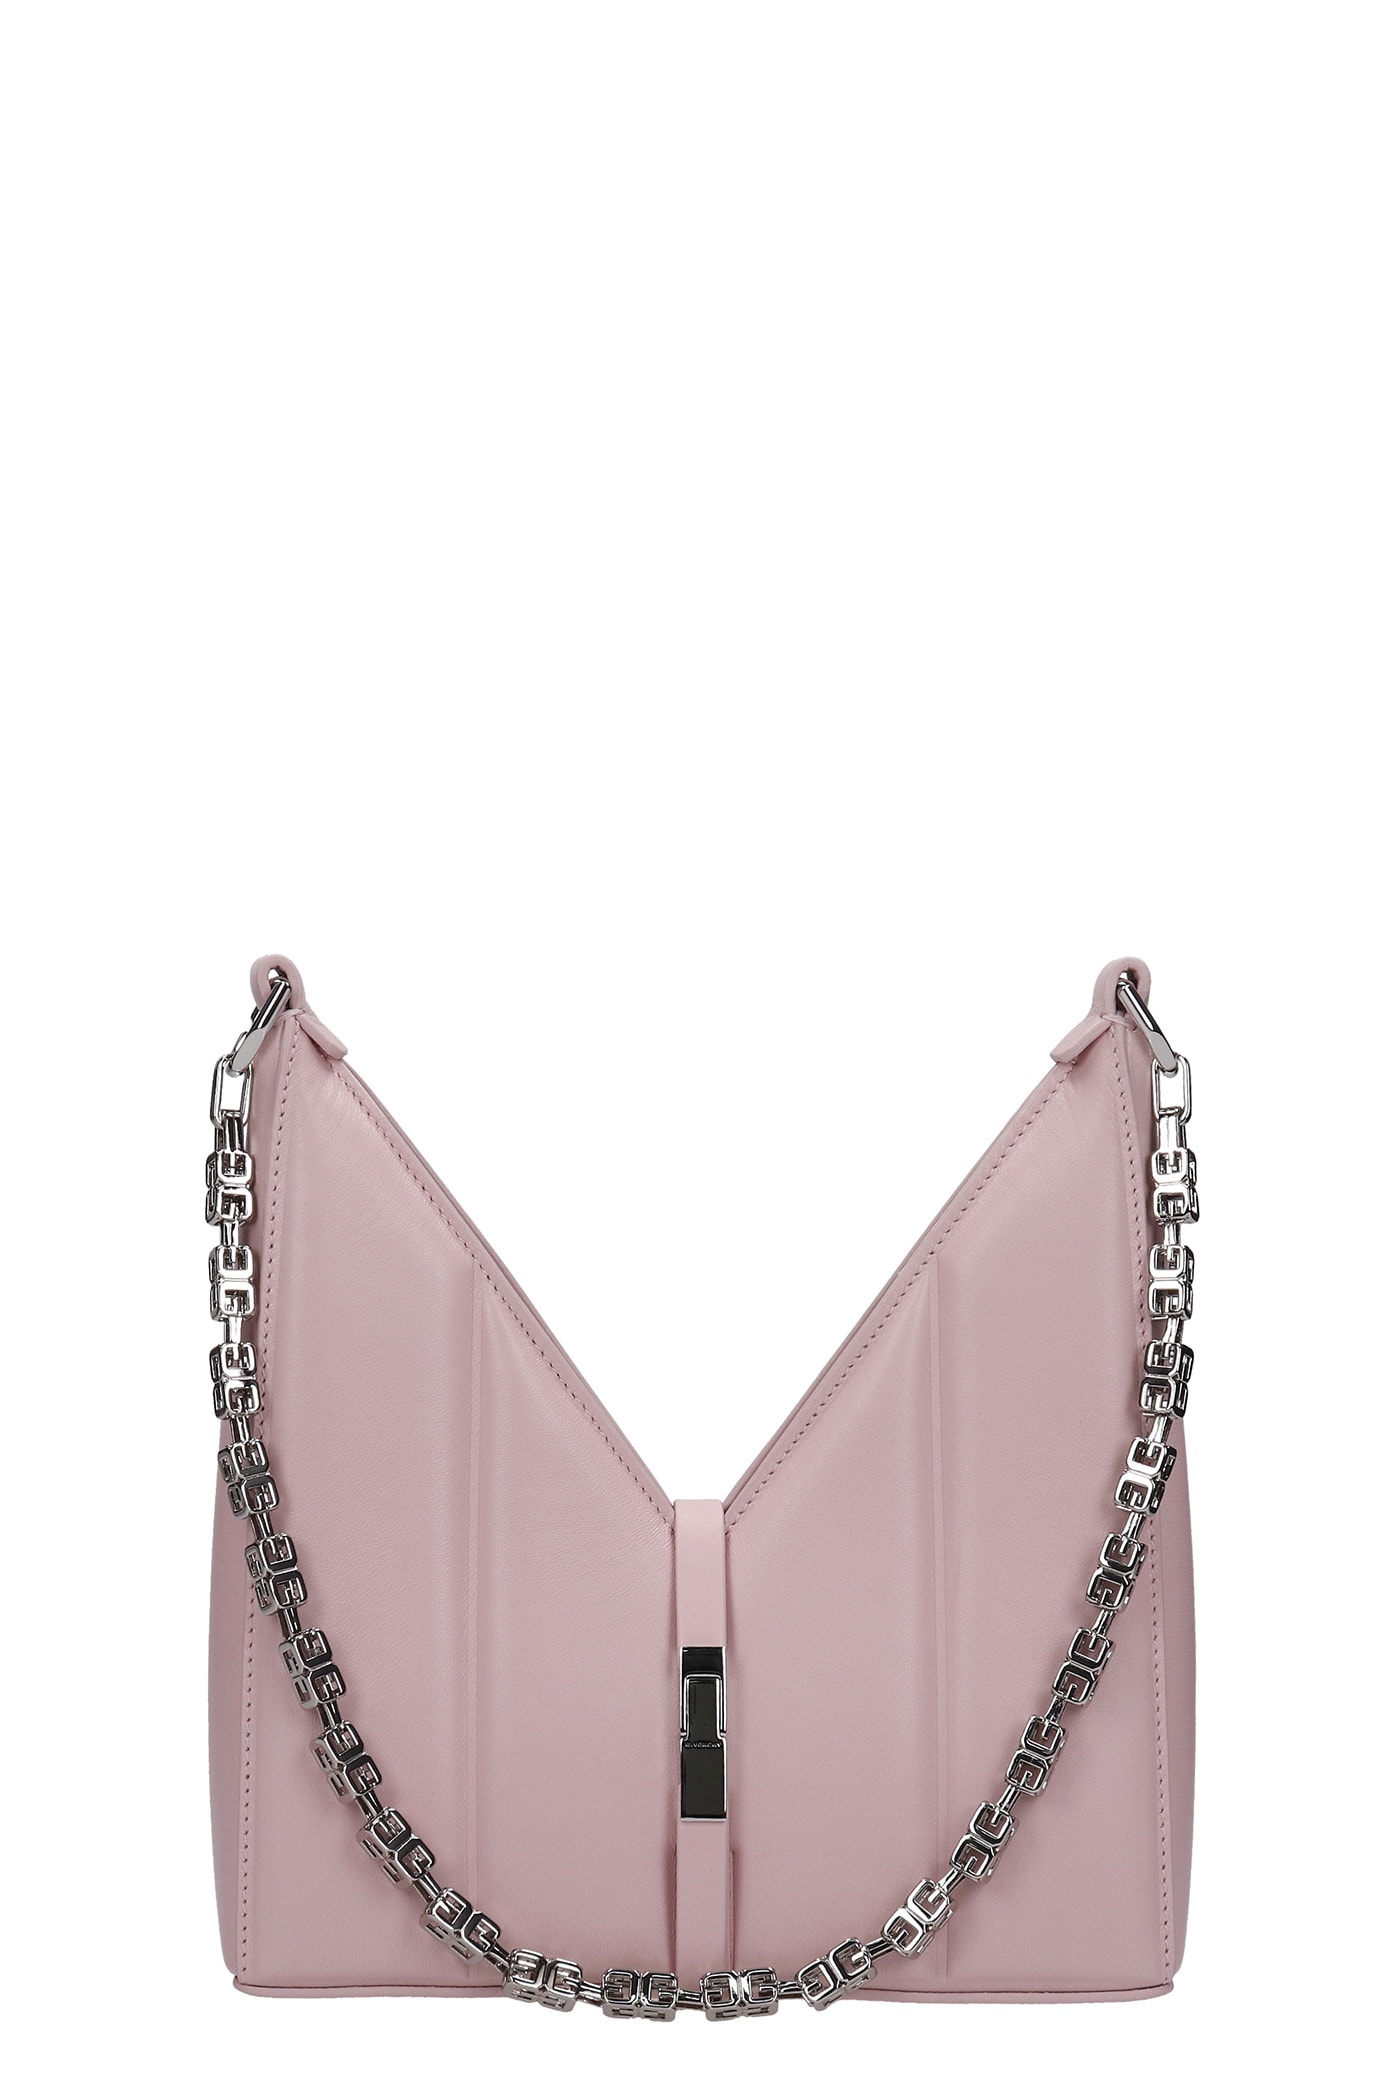 Givenchy Cut Out Shoulder Bag In Rose-pink Leather